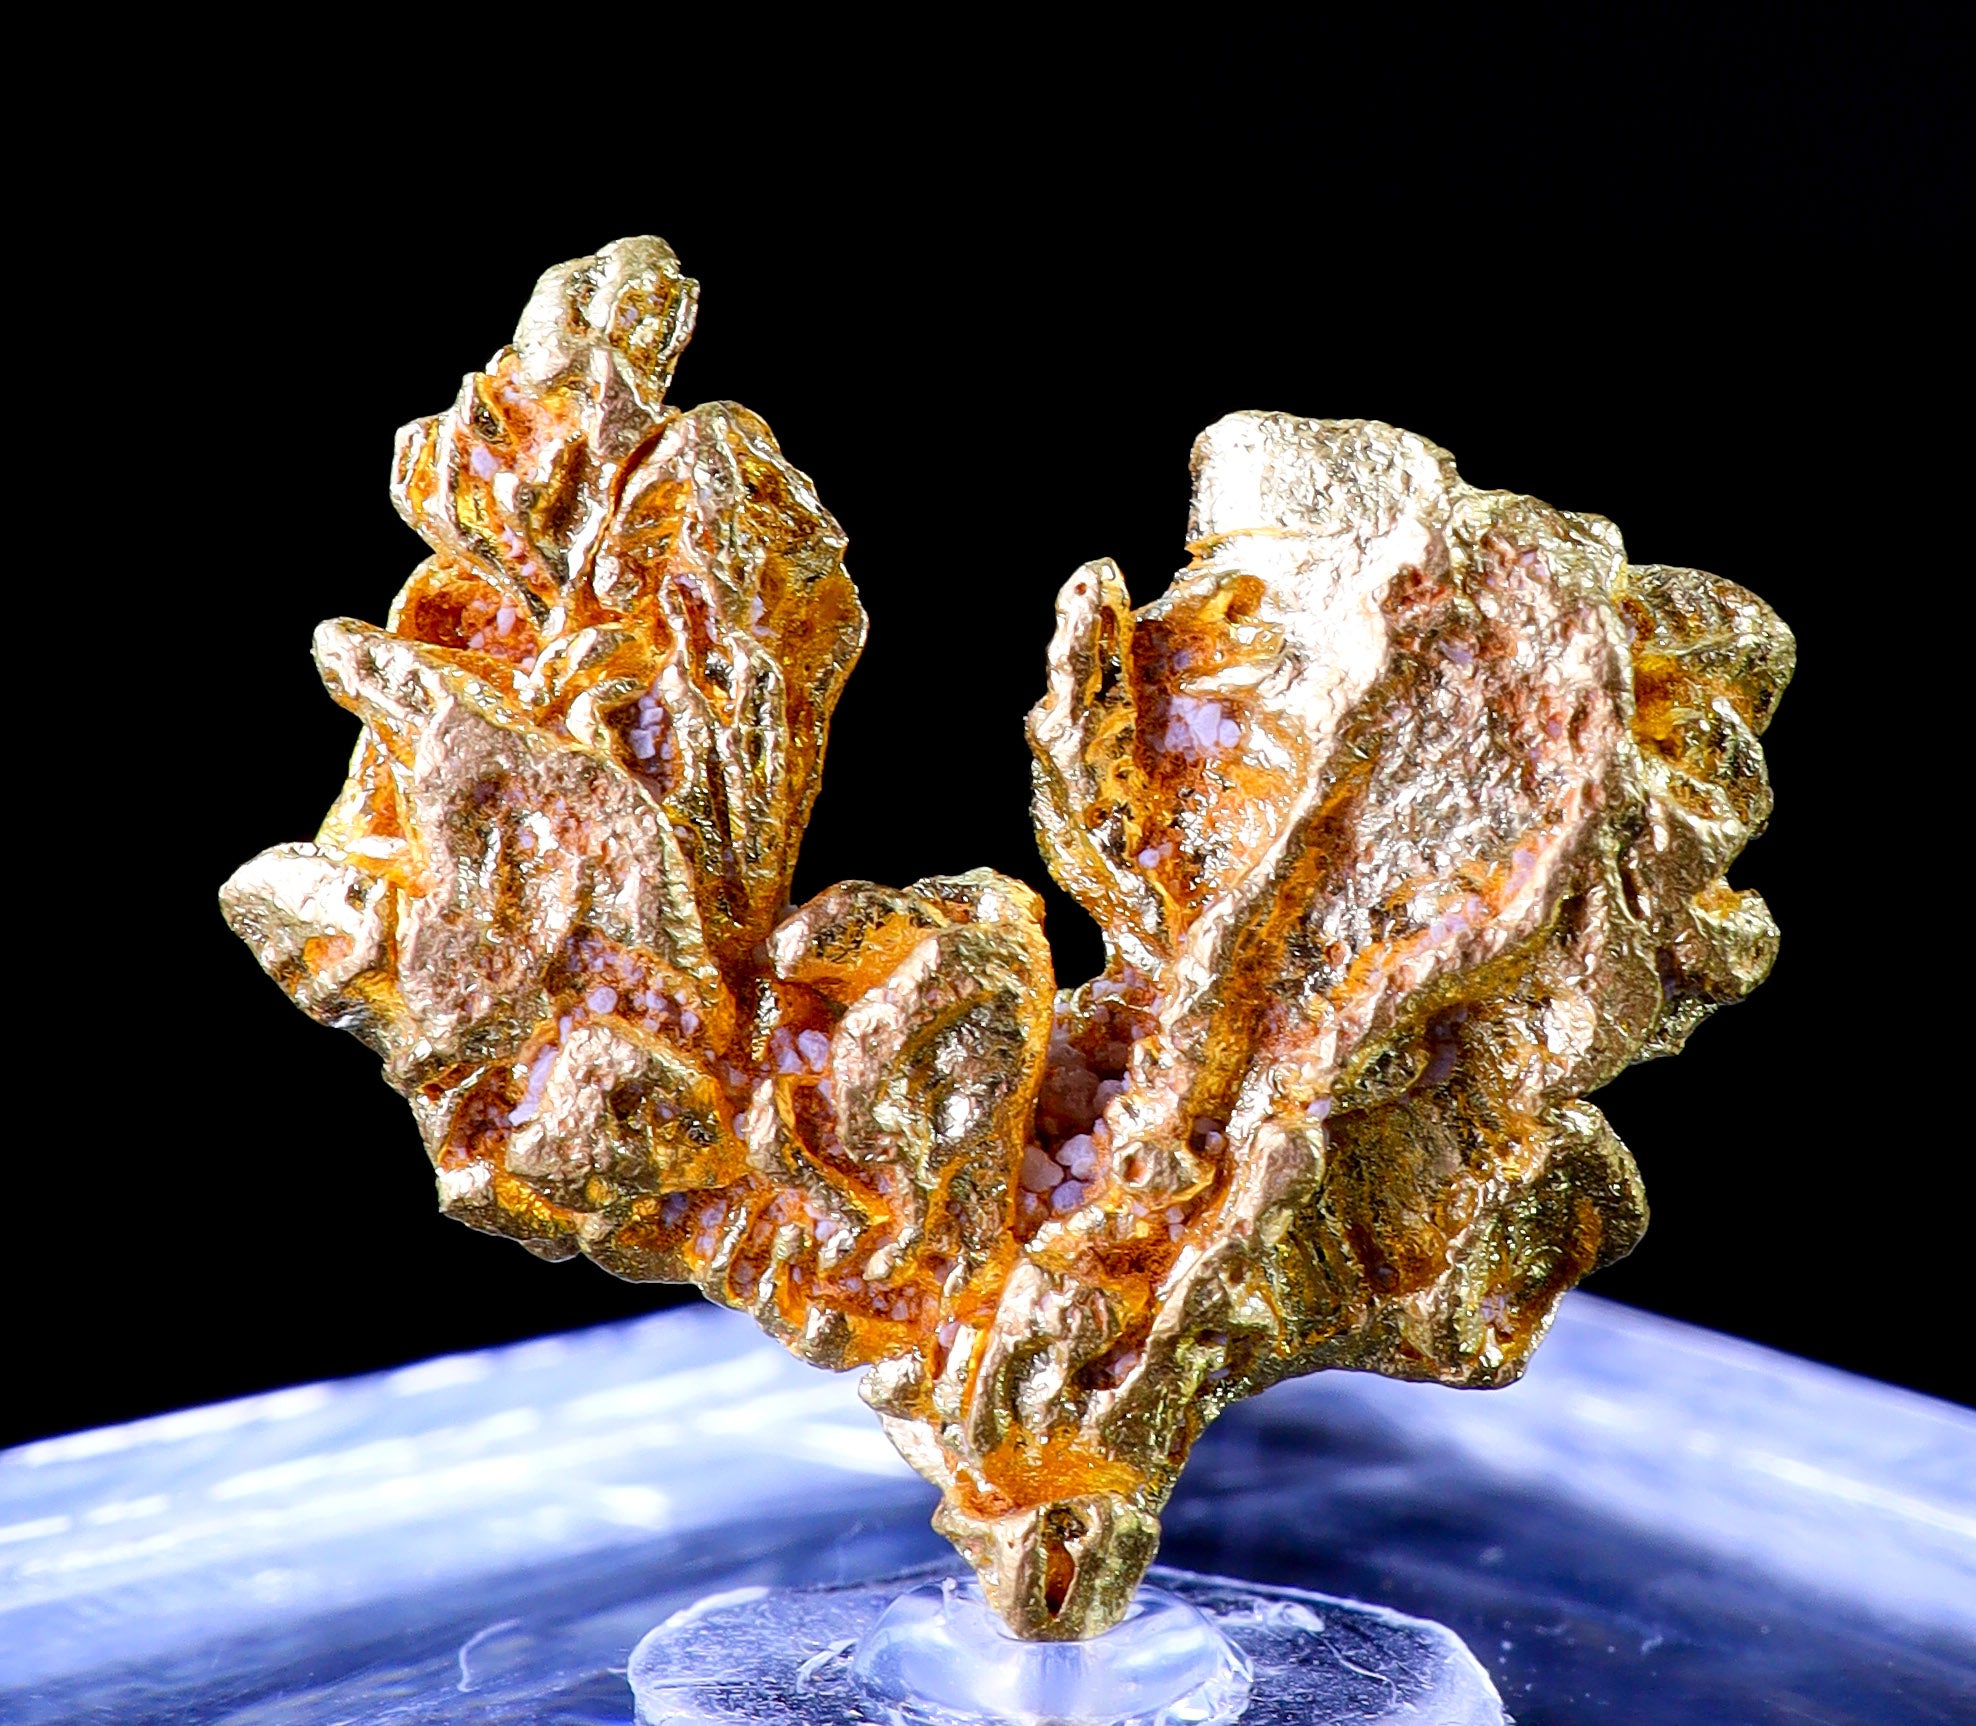 #24 Brazil Crystalline Natural Gold Nugget 5.12 grams